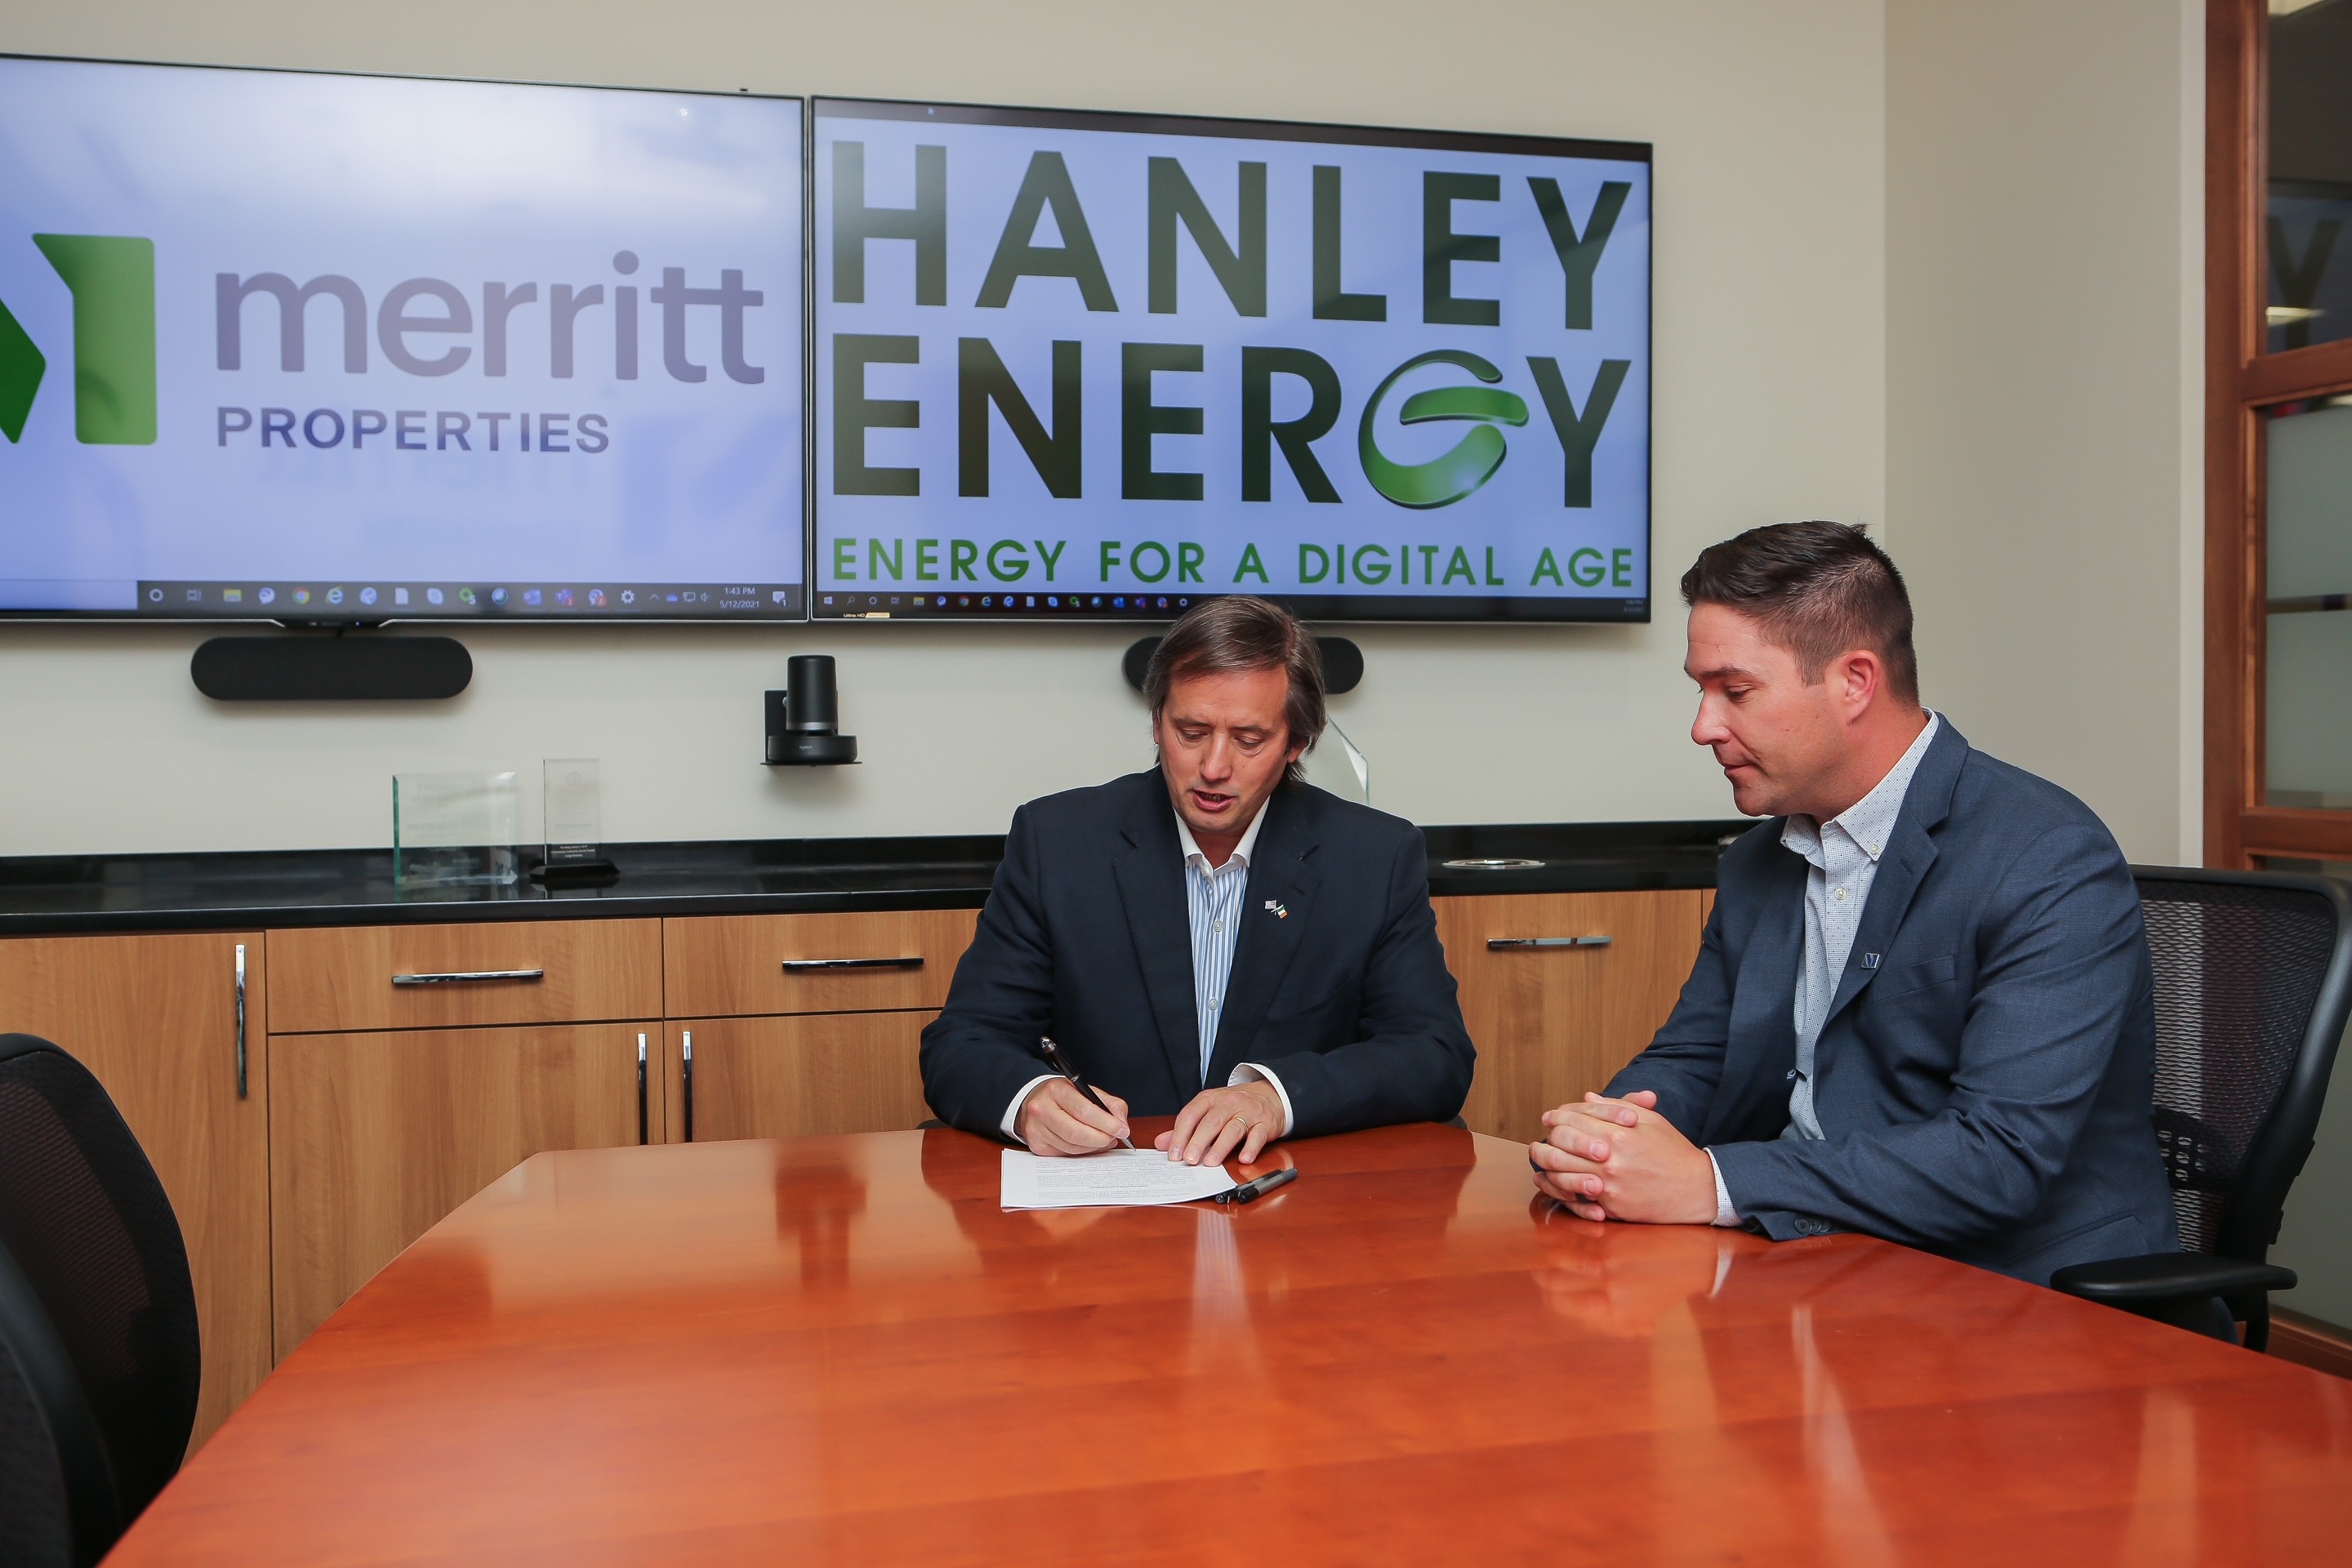 Hanley Energy signs a full-building lease at Merritt Ashbrook Business Park